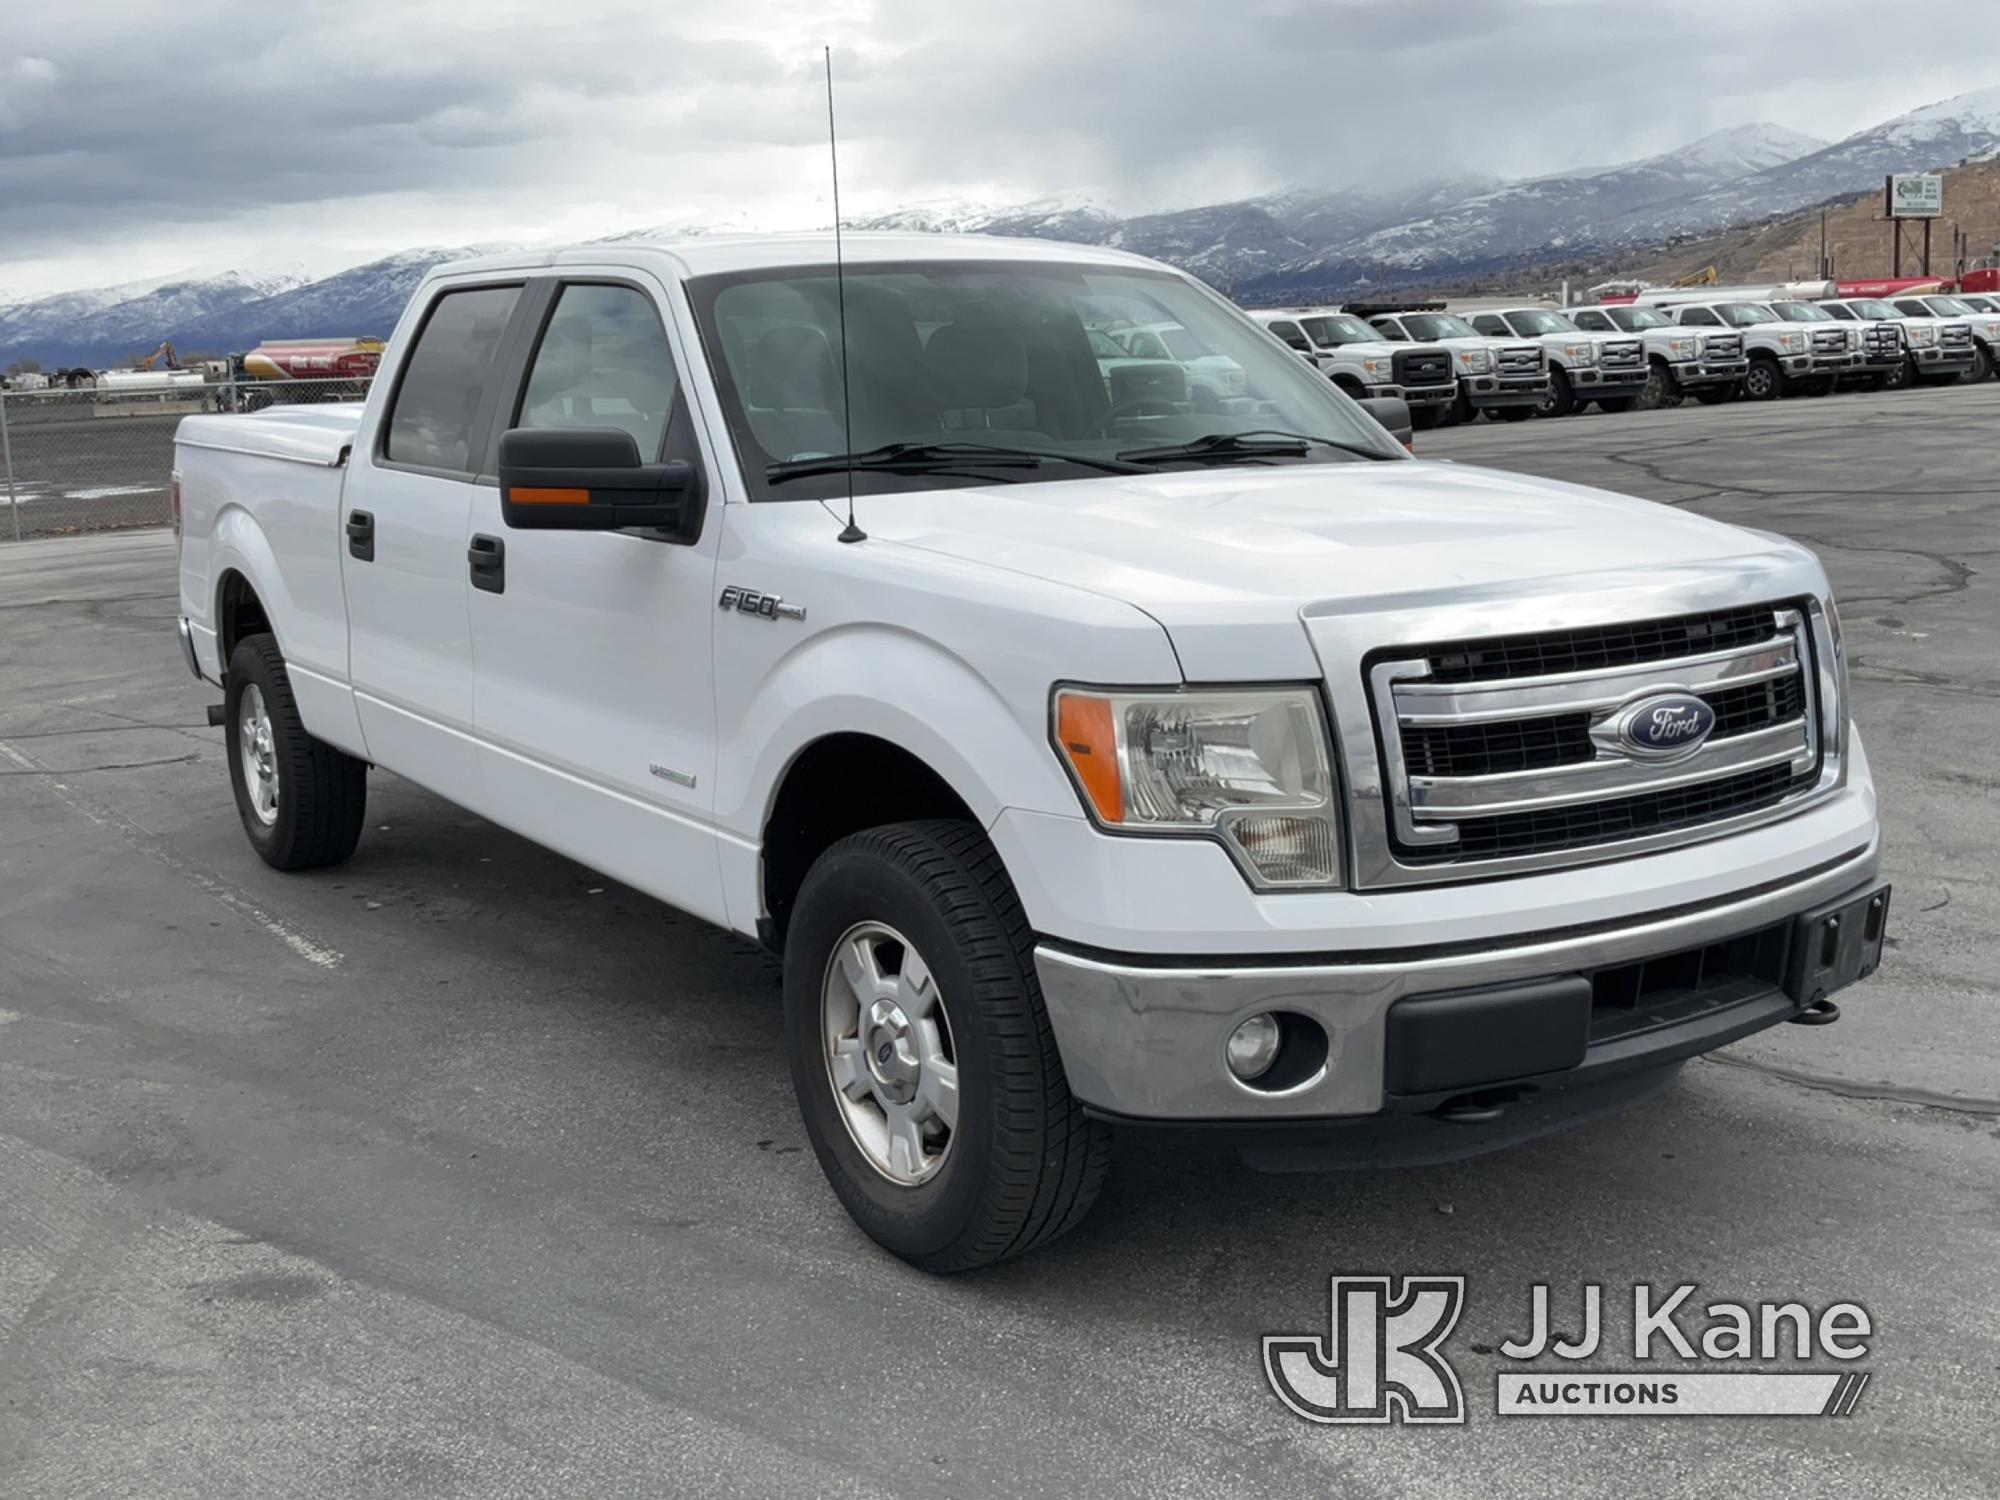 (Salt Lake City, UT) 2014 Ford F150 4x4 Crew-Cab Pickup Truck Runs & Moves) (Check Engine Light On